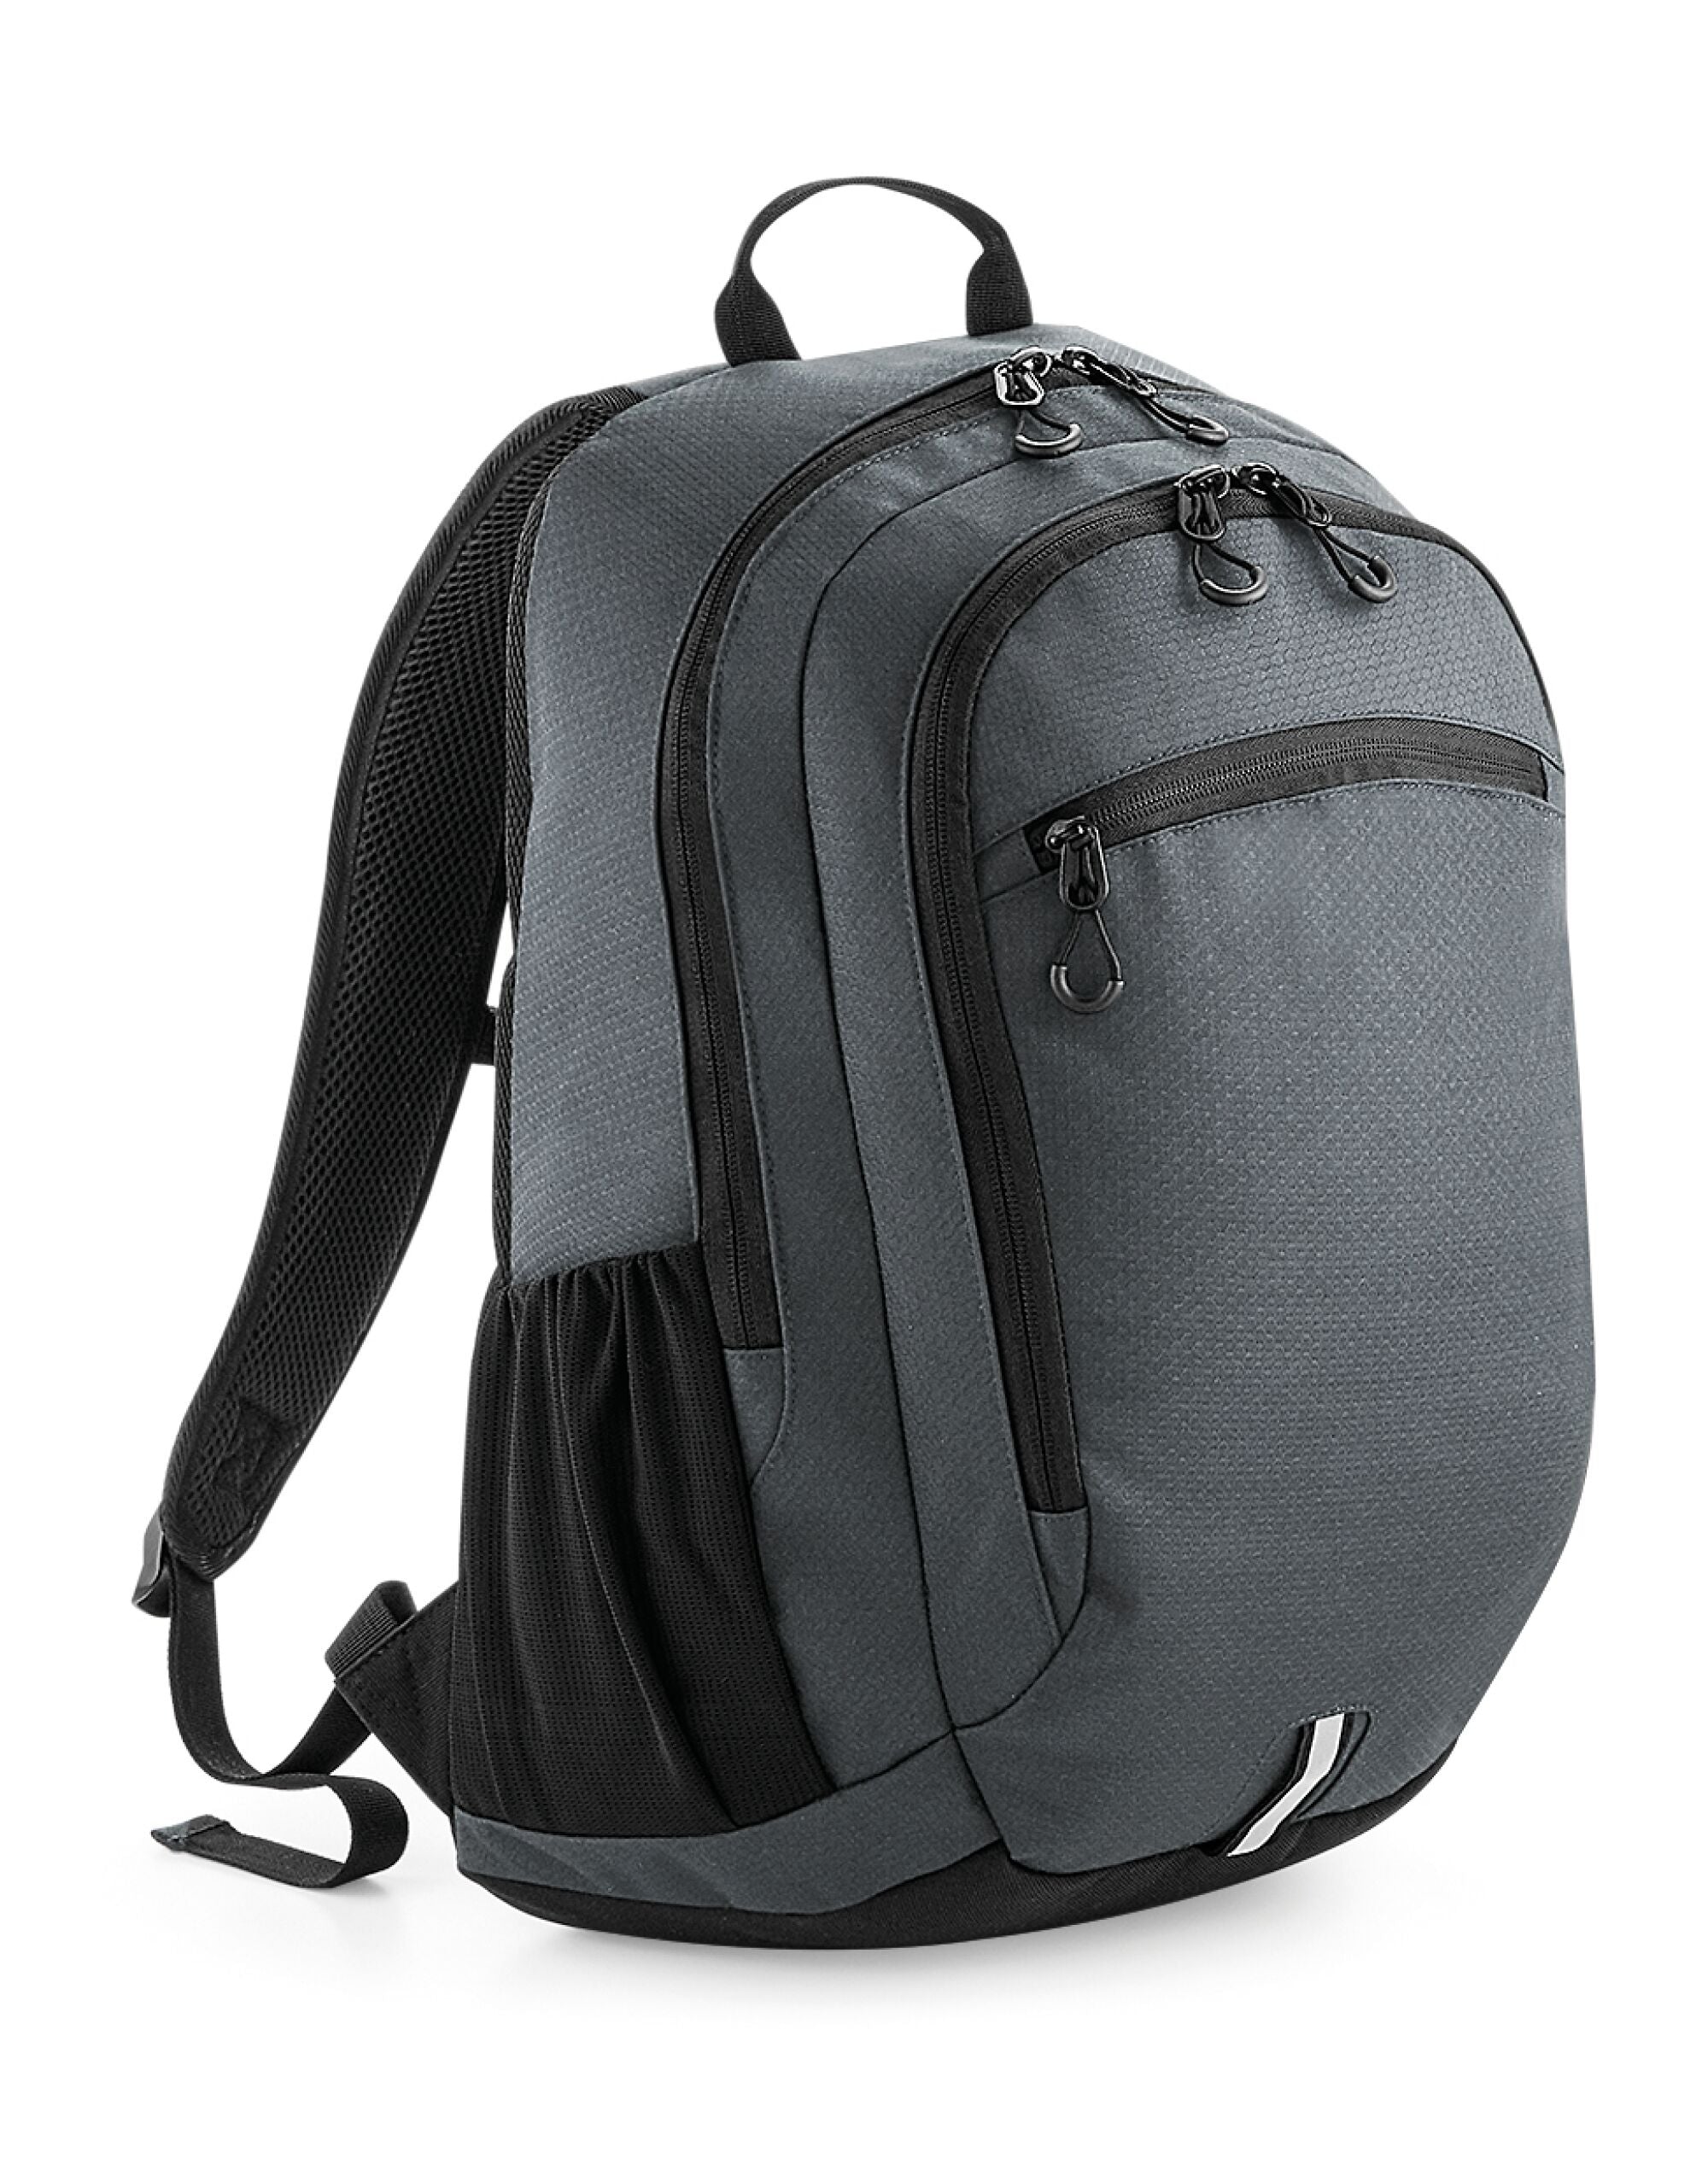 Quadra Endeavour Backpack TearAway label for ease of rebranding (QD550)